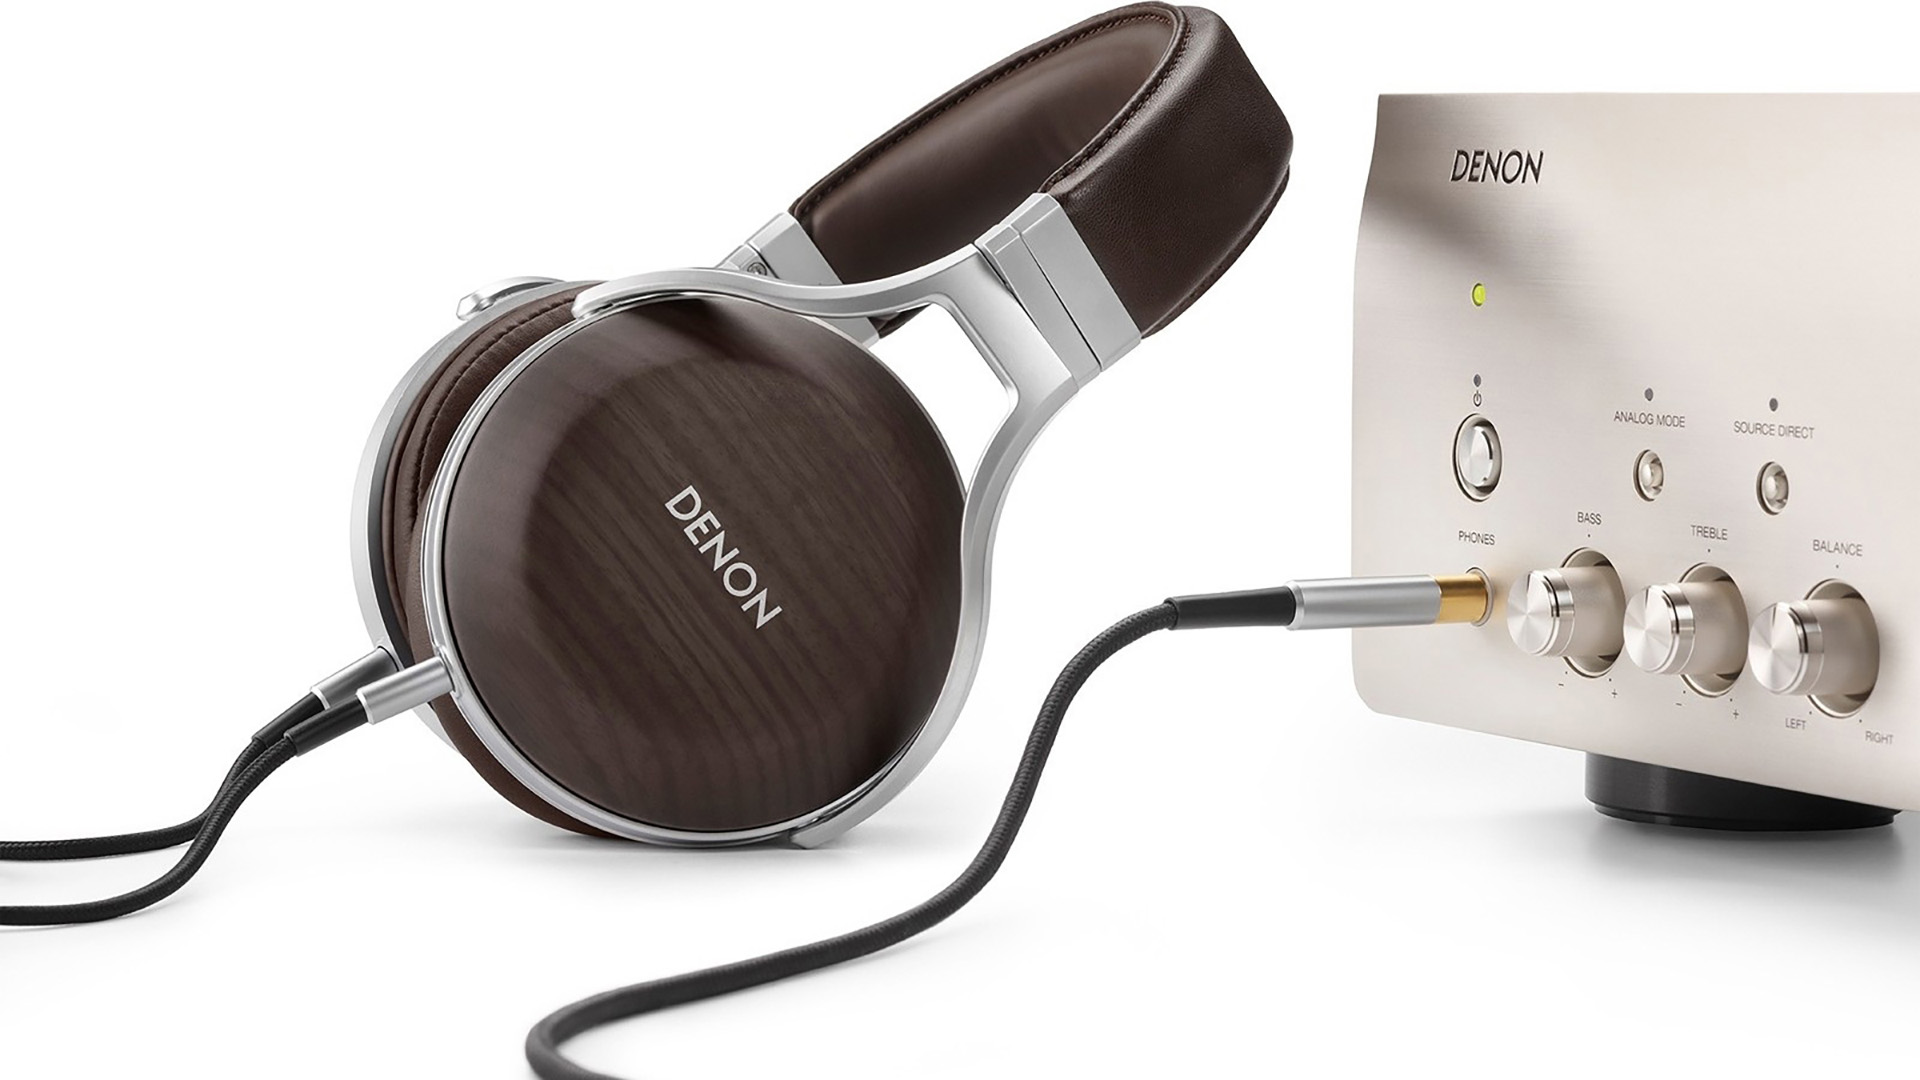 Review: Denon AH-D5200 | Fabulous Closed Headphones From Denon